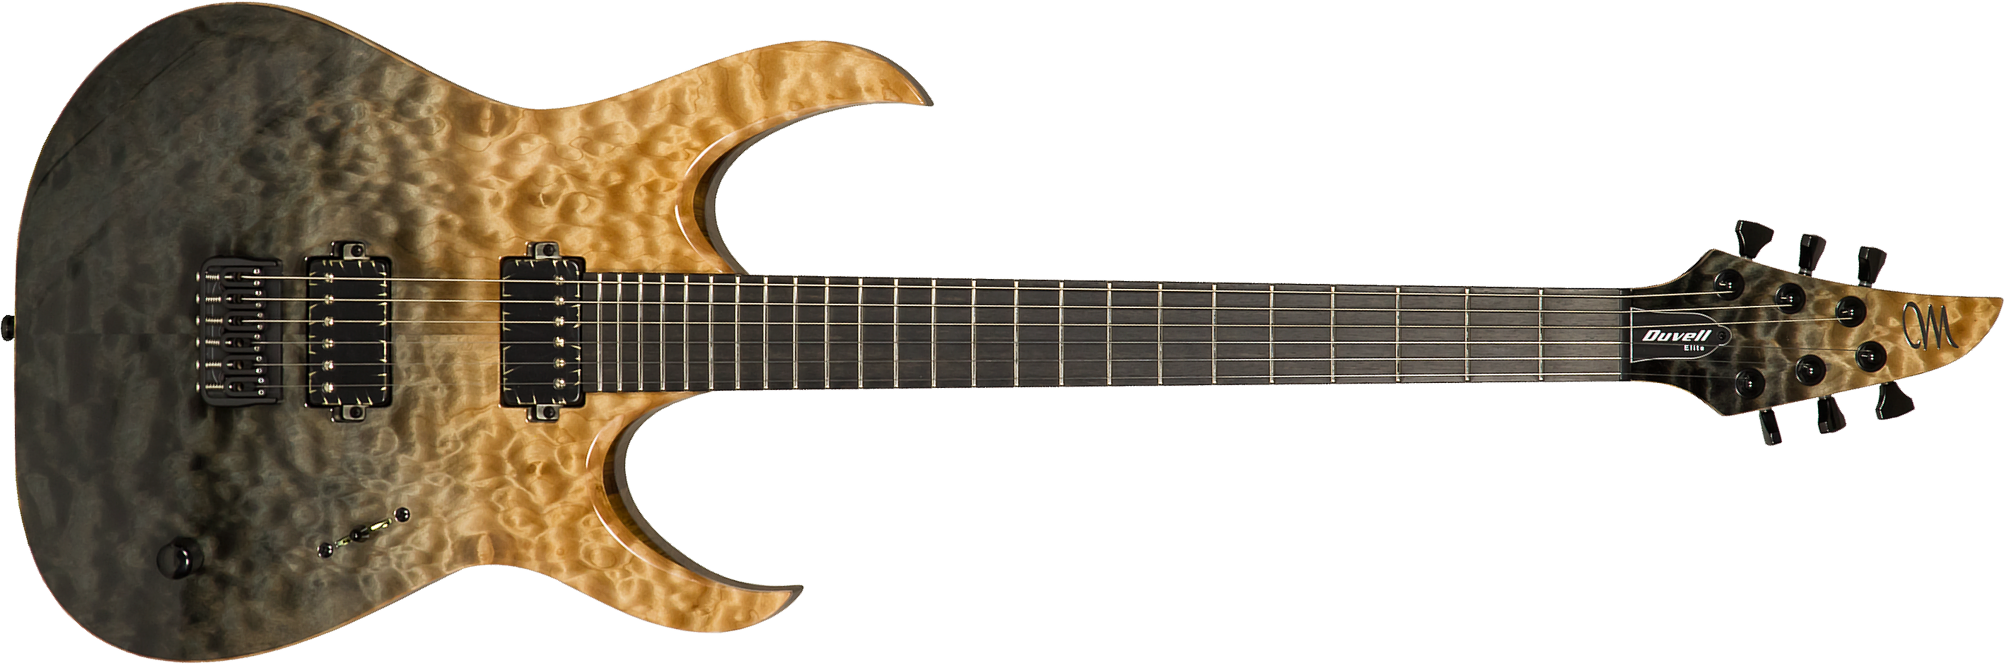 Mayones Guitars Duvell Elite 6 2h Seymour Duncan Ht Eb #df2106528 - Natural & Graphite - Metal electric guitar - Main picture